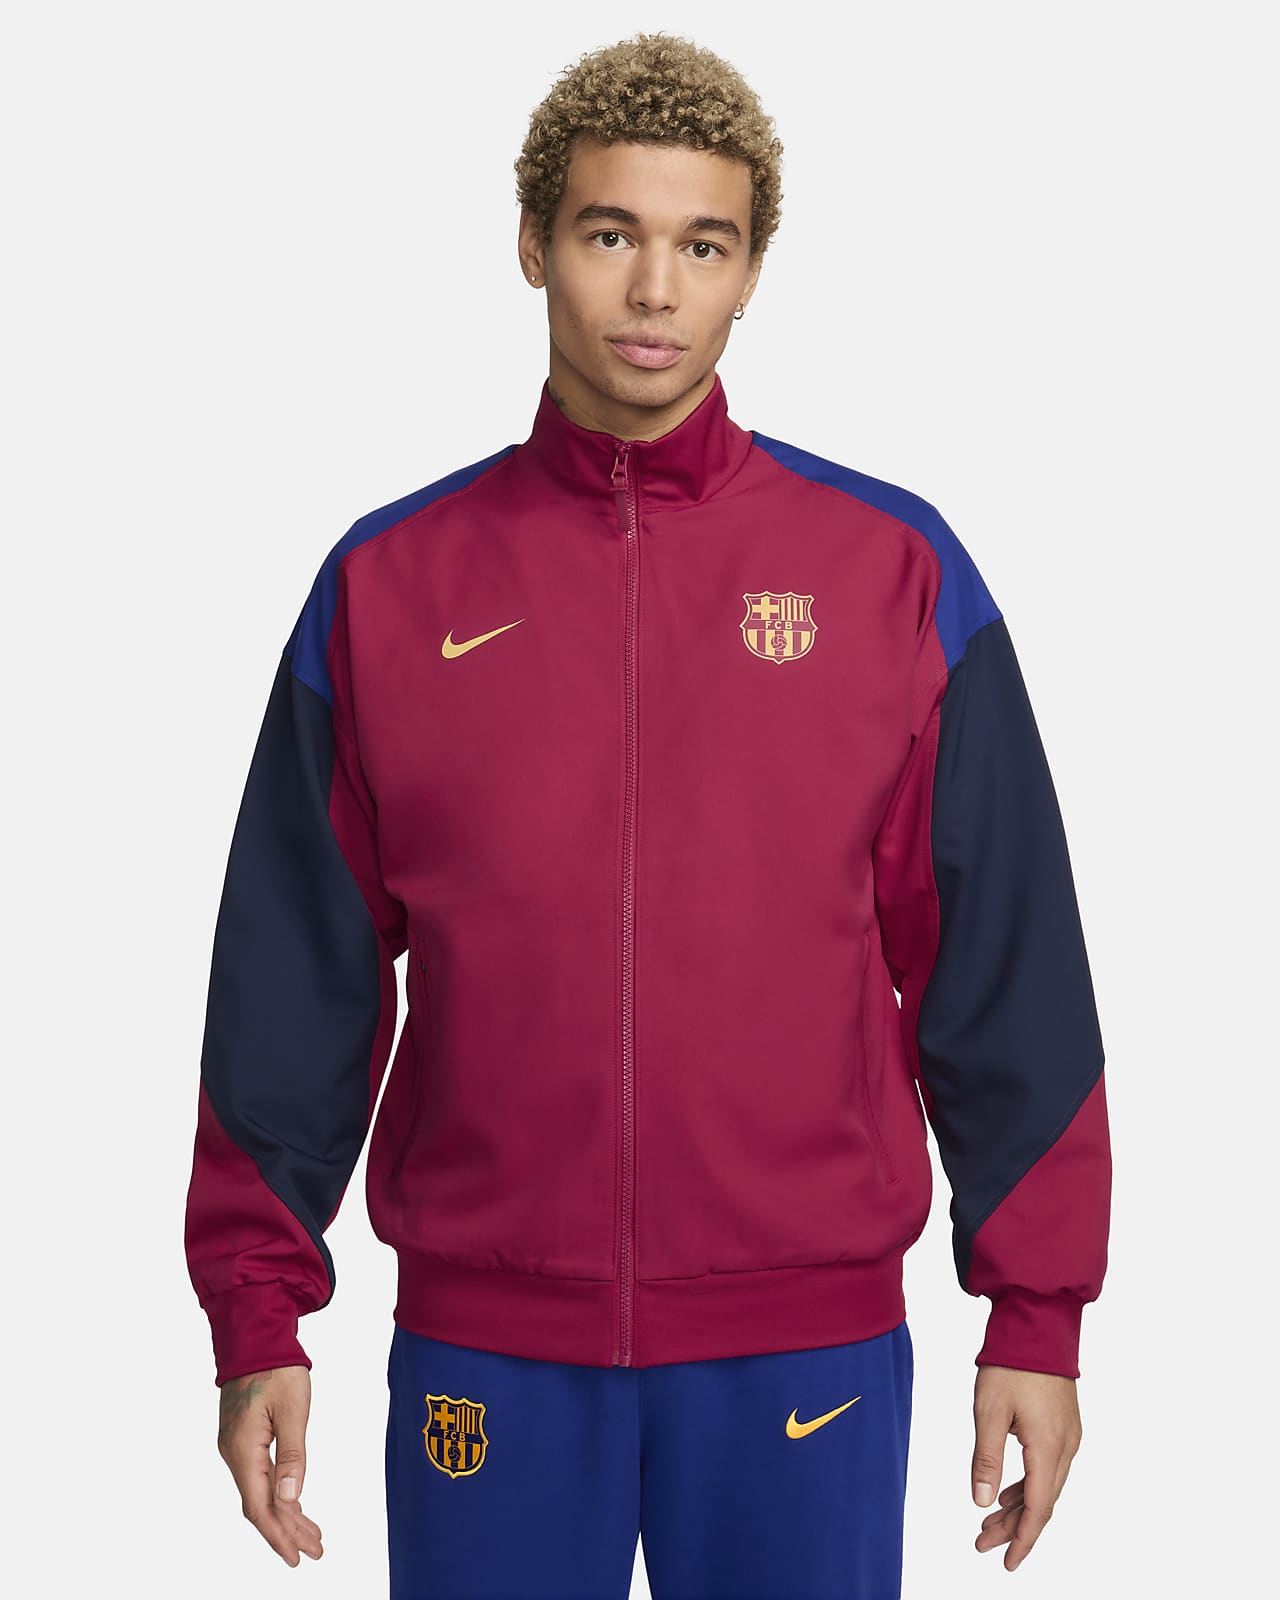 FC Barcelona Strike Nike Dri-FIT futball-melegítőfelső férfiaknak